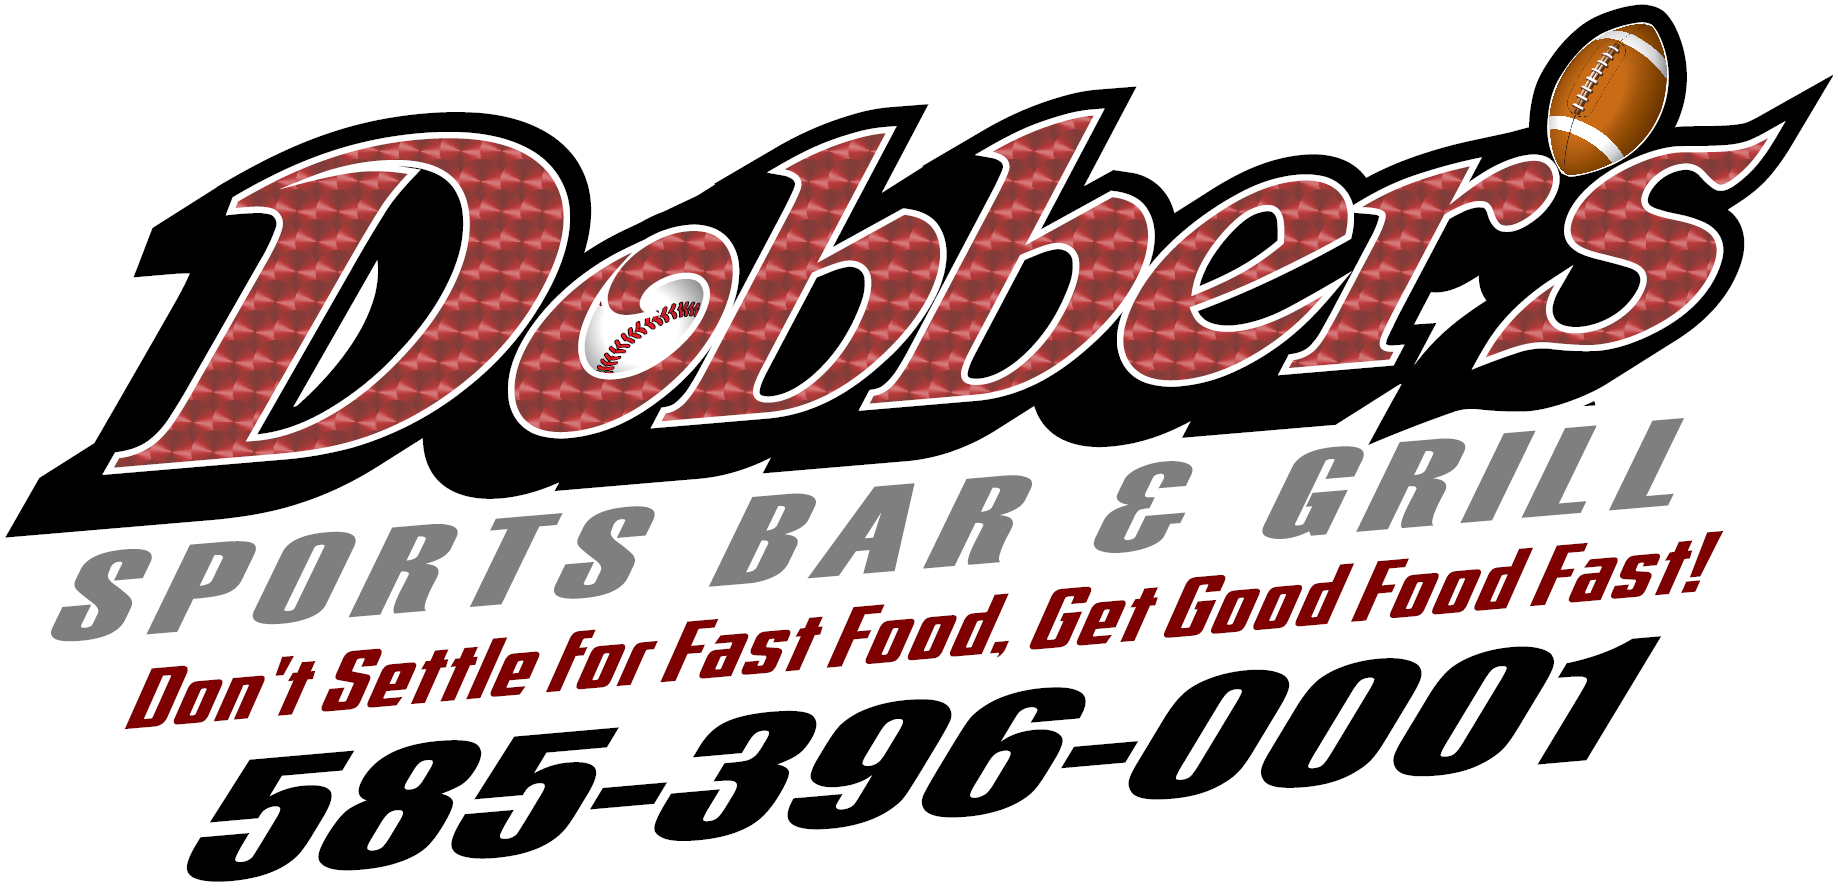 Dobber's